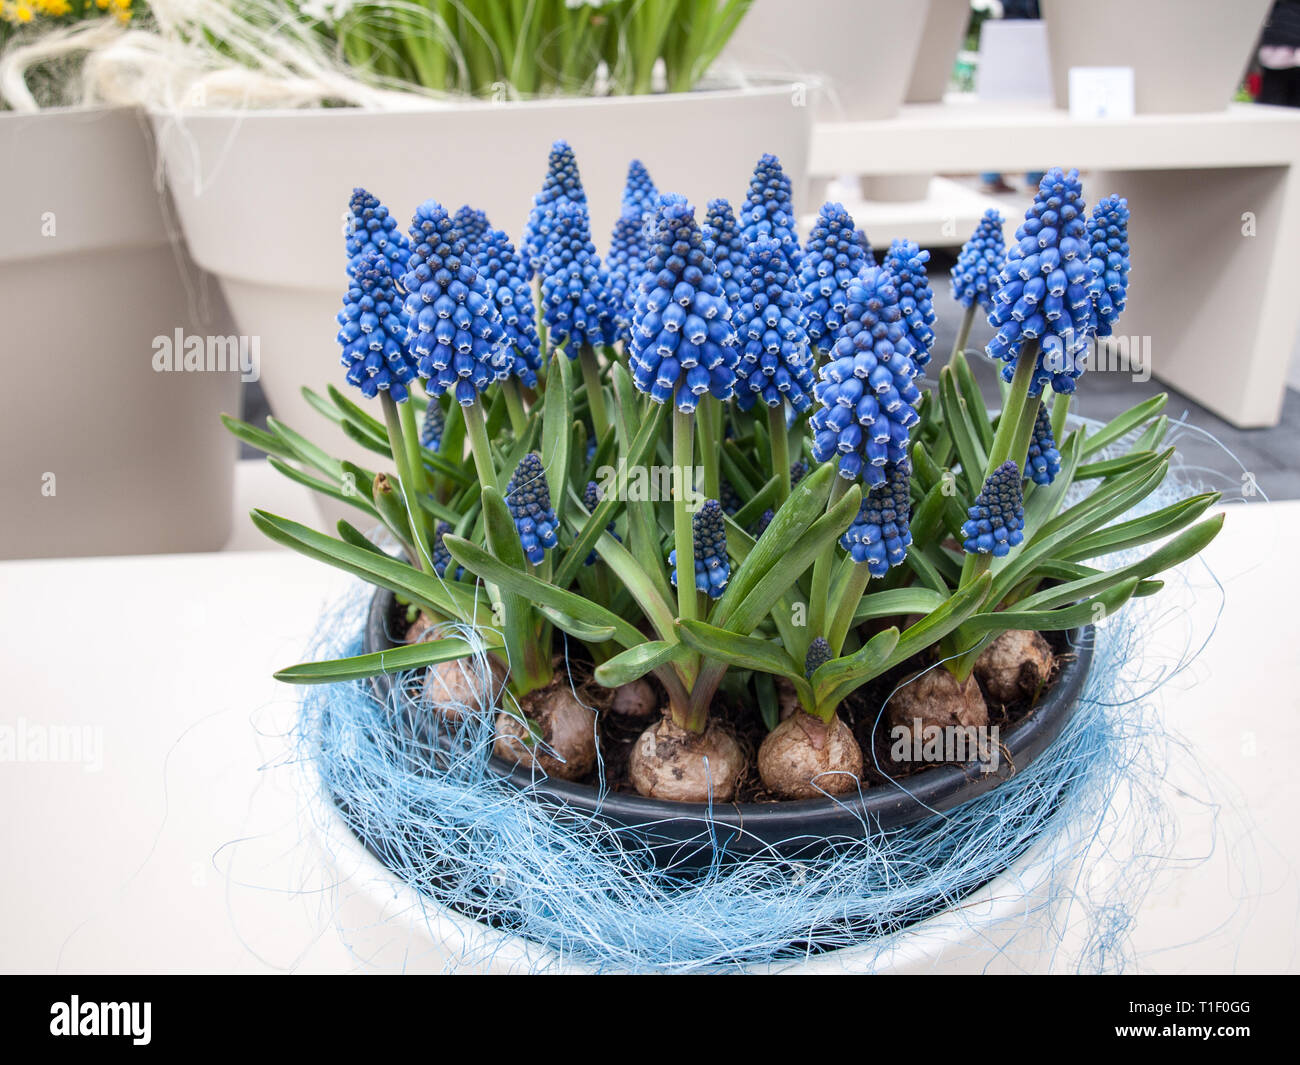 blue grape hyacinth muscari armeniacum flowers with visible bulbs Stock Photo